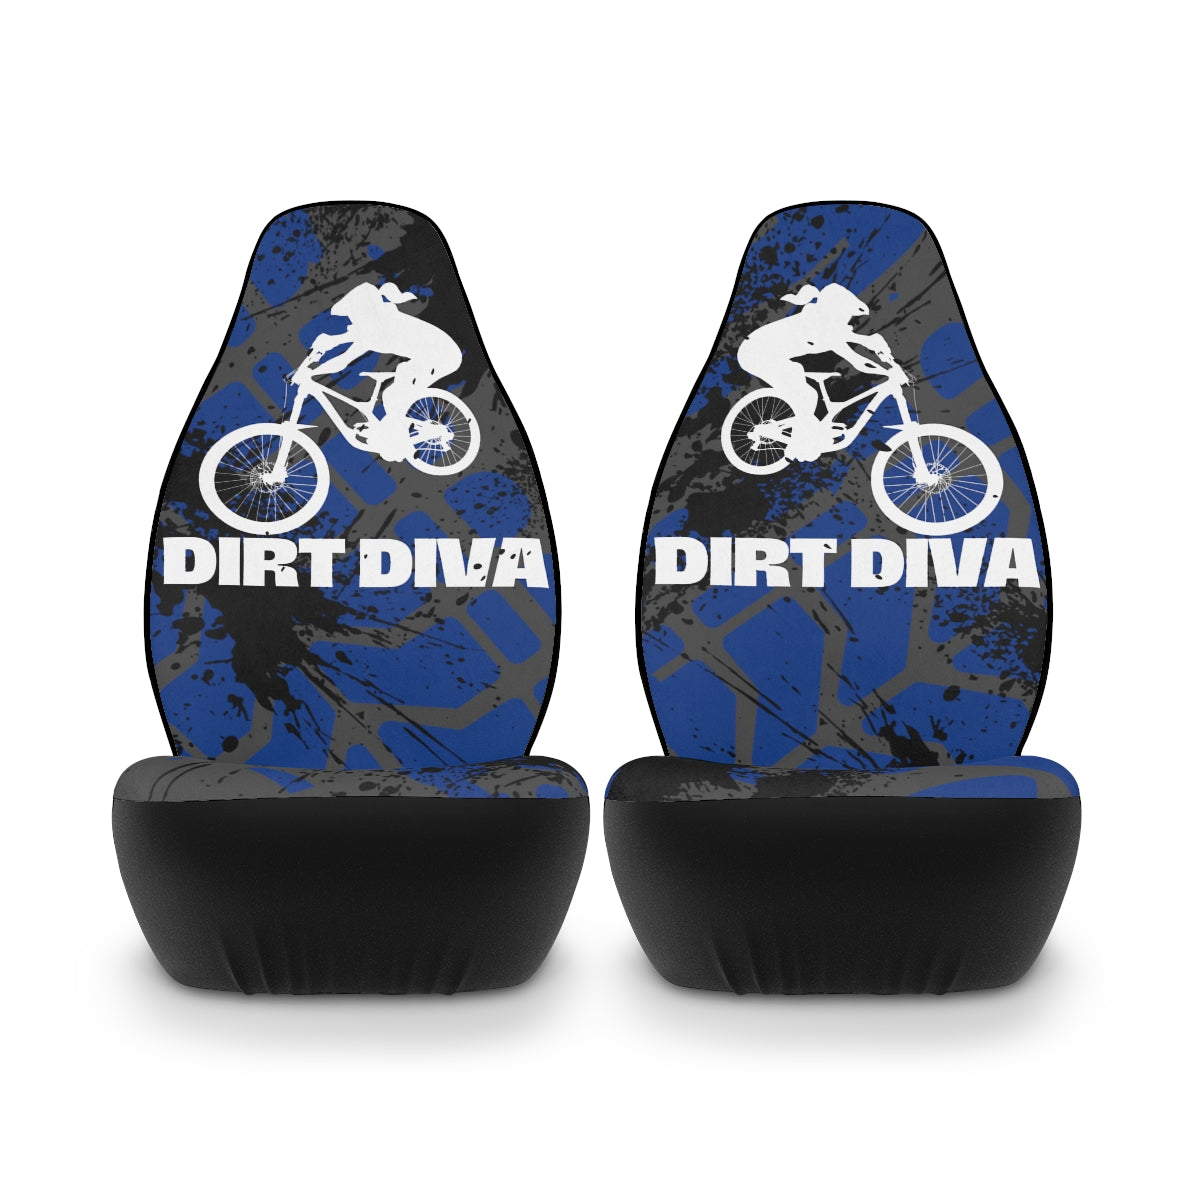 Dirt Diva - Car Seat Covers -  Royal Blue - Set of 2 - Car - Truck - SUV